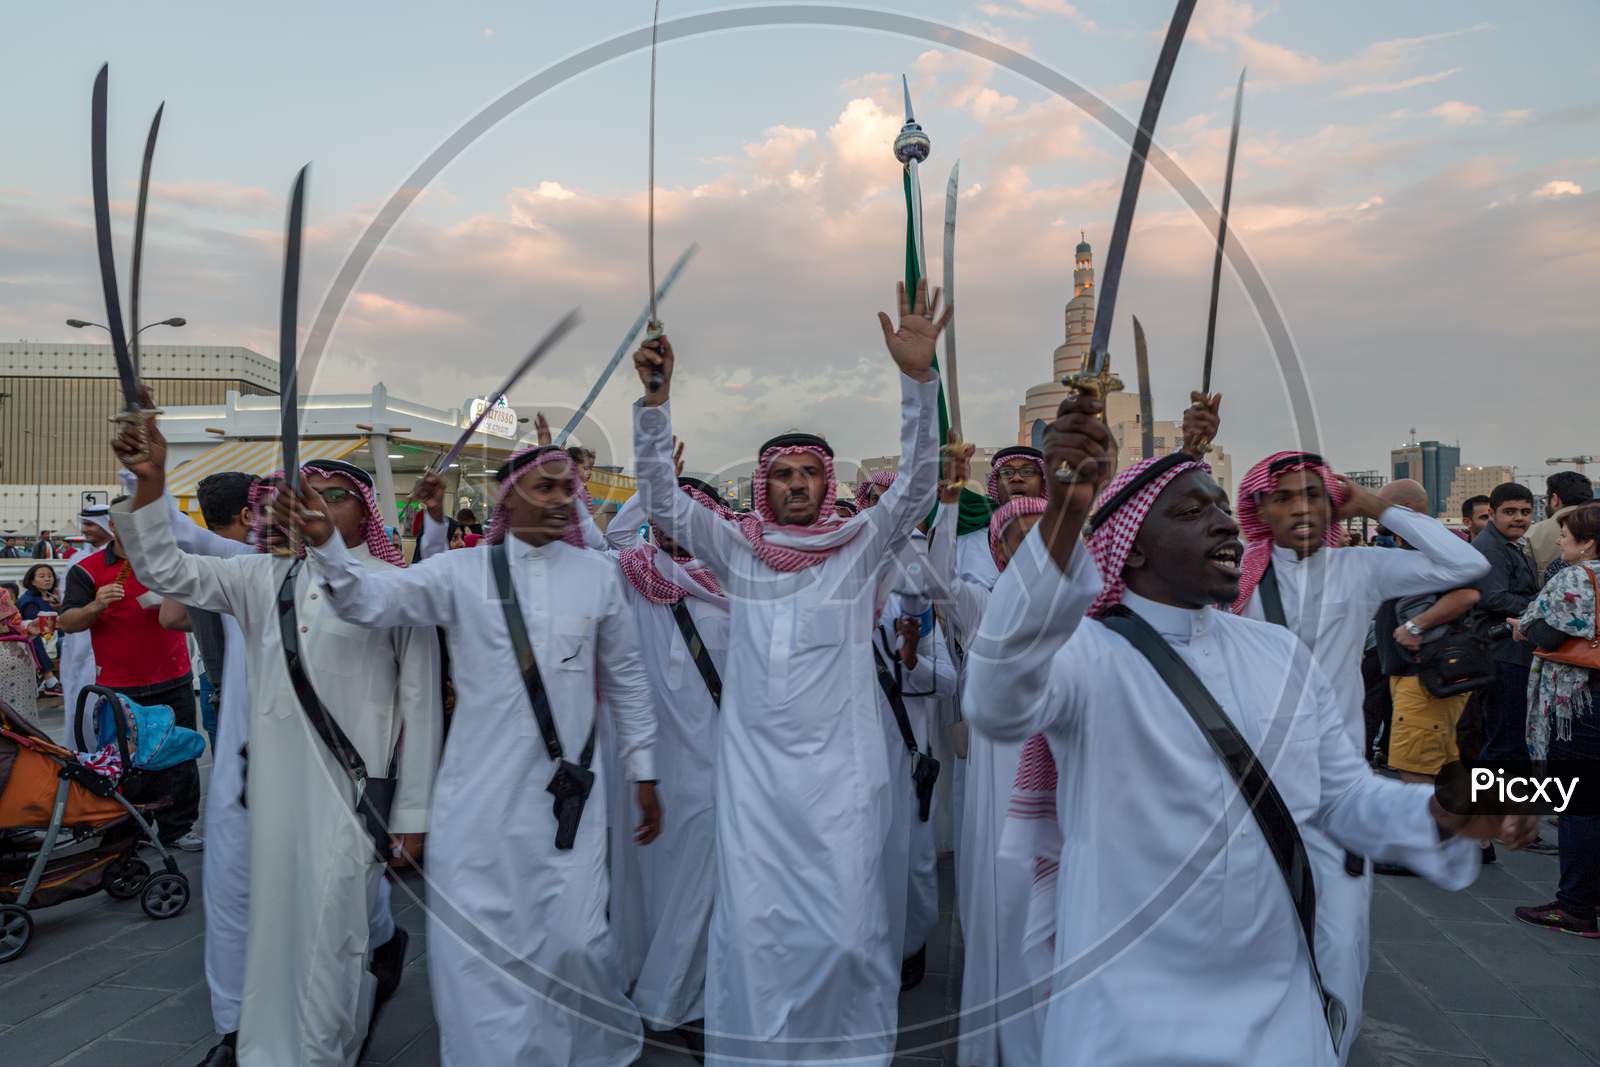 Traditional Arabic folklore dance  from Saudi Arabia in Souk Waqif spring festival,Doha Qatar